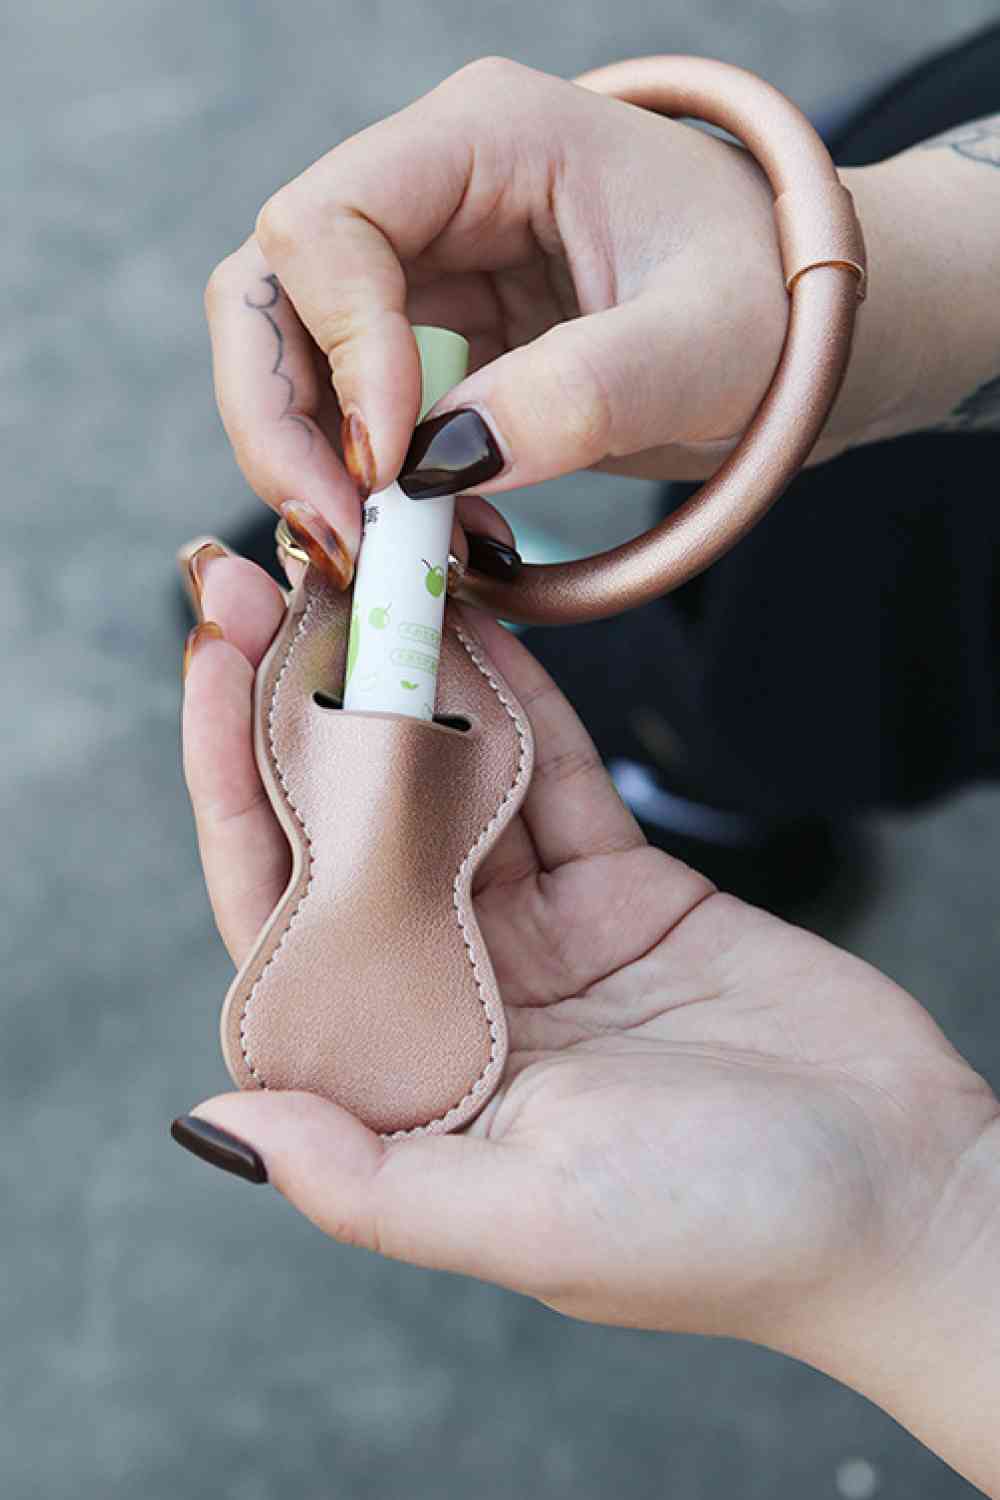 PU Wristlet Keychain with Card Holder